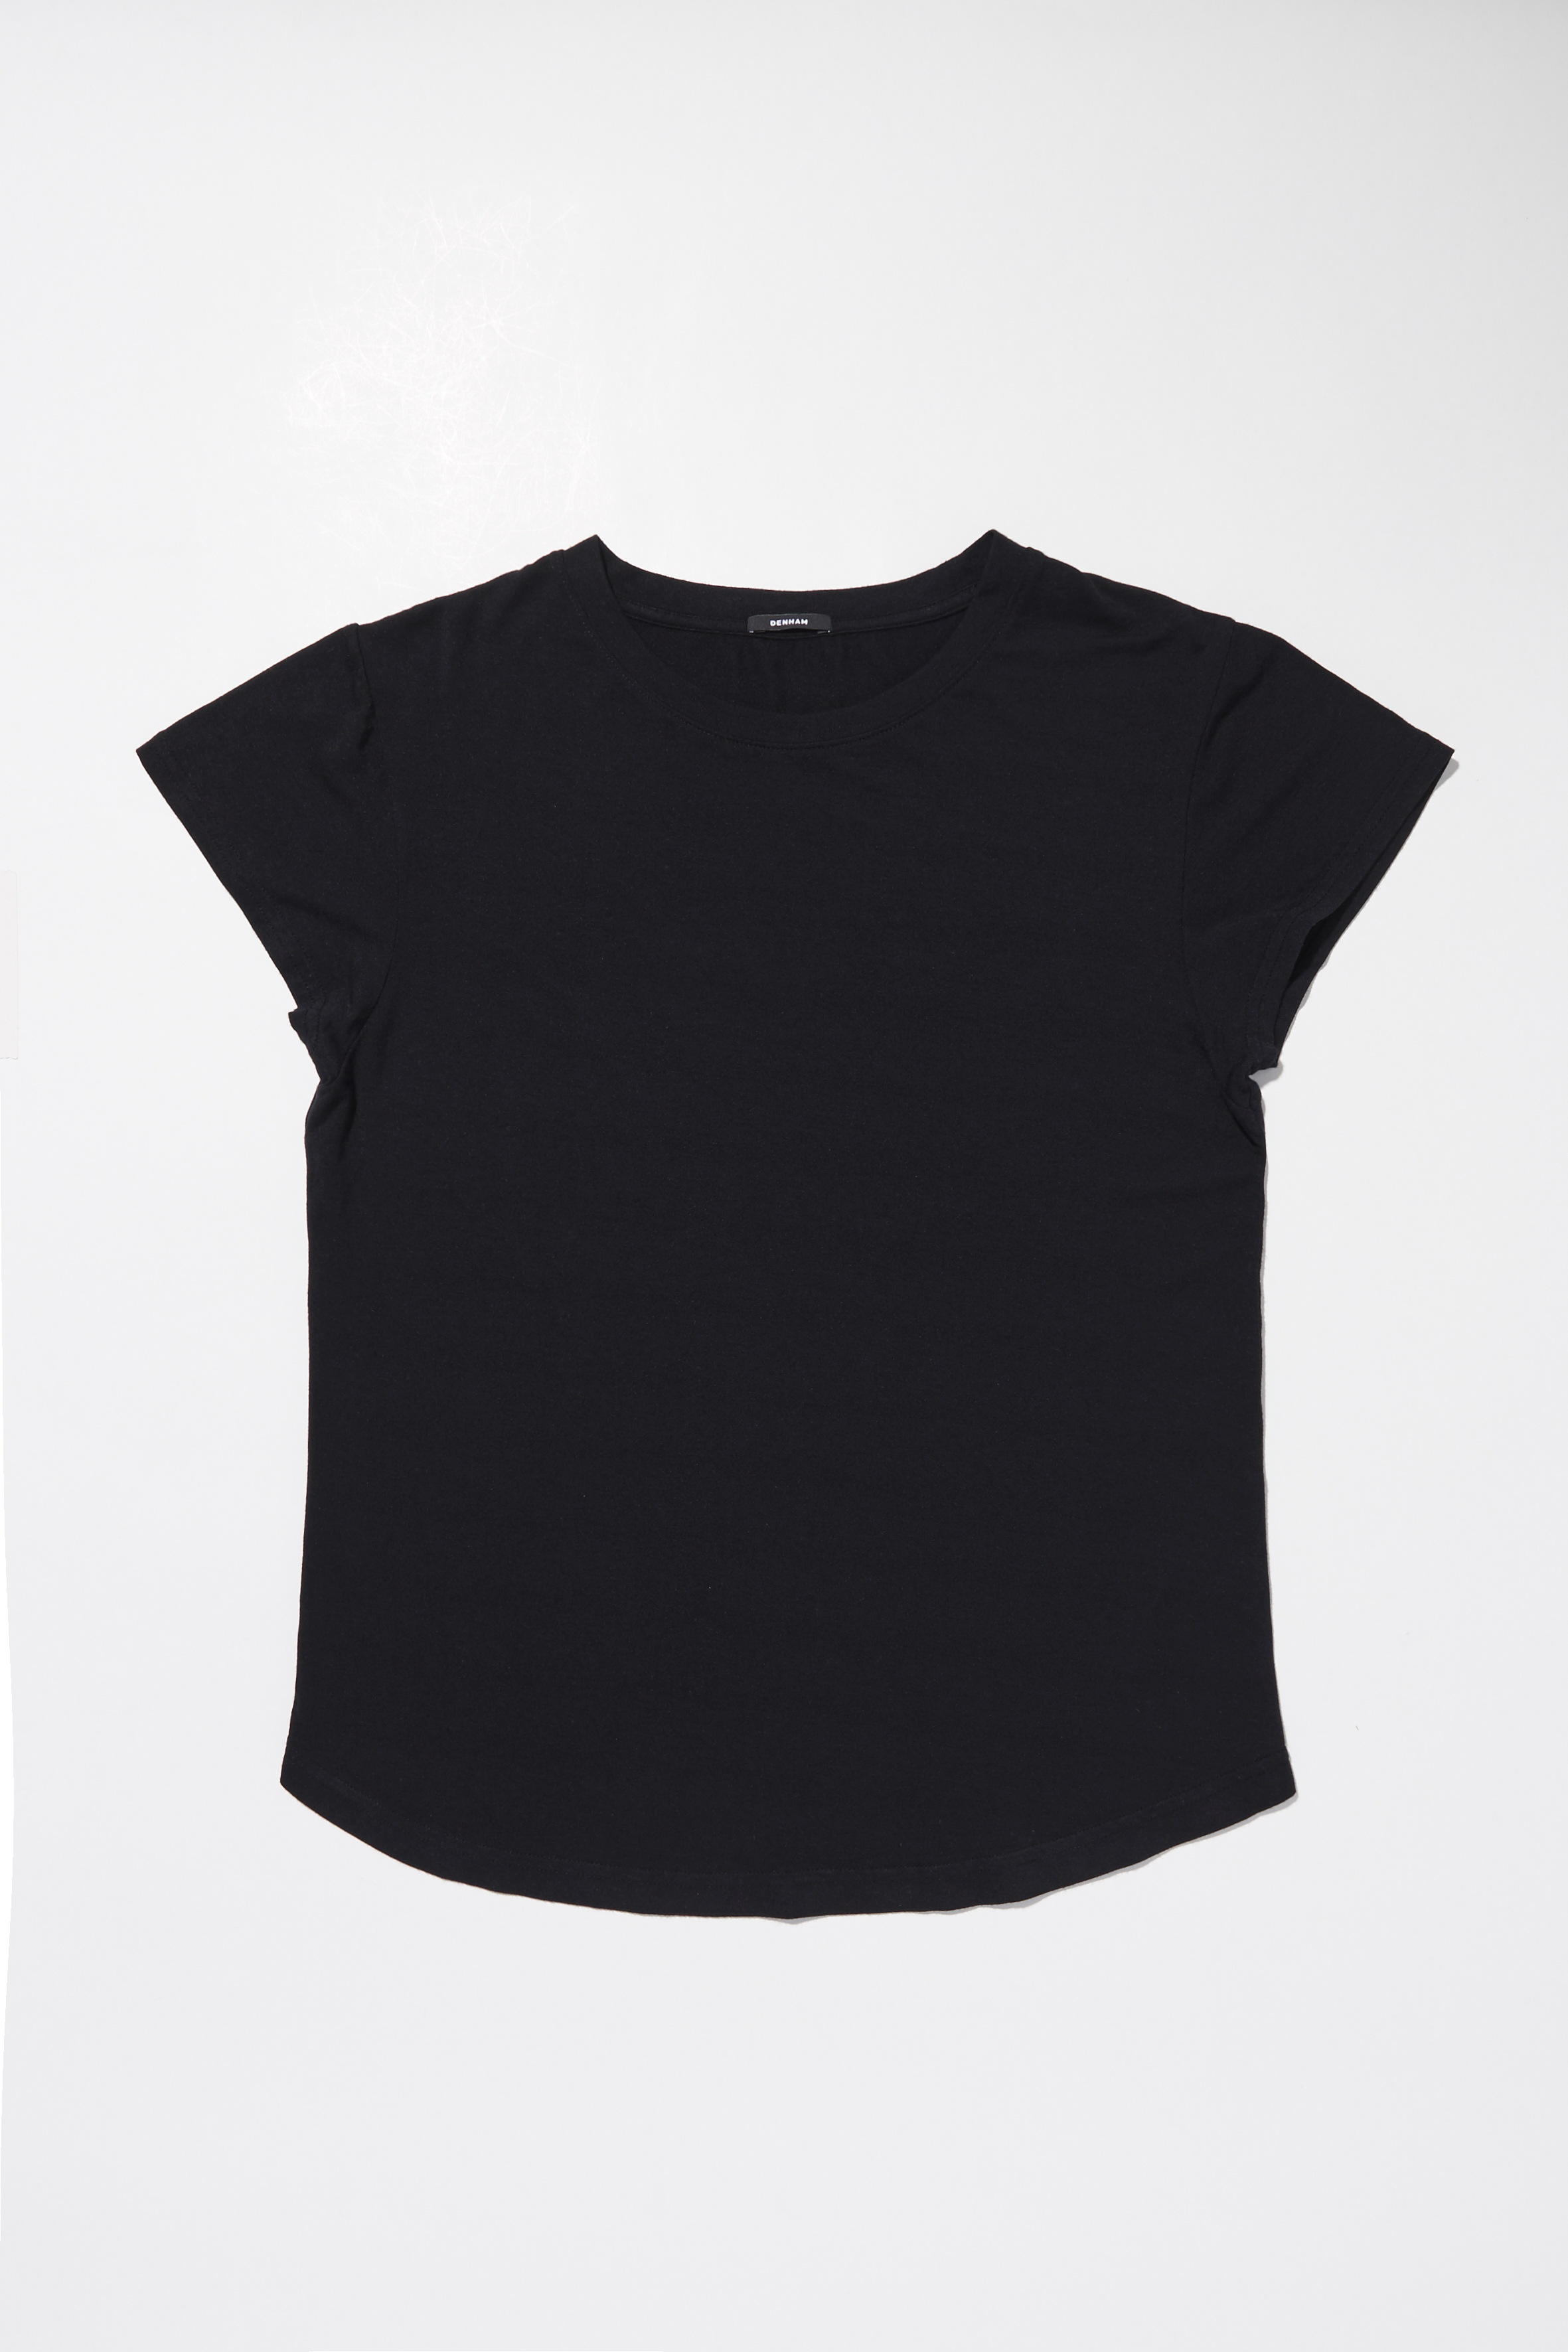 DENHAM 02-22-02-52-071 HIRO TEE MSB Damen T-Shirt BLACK 2